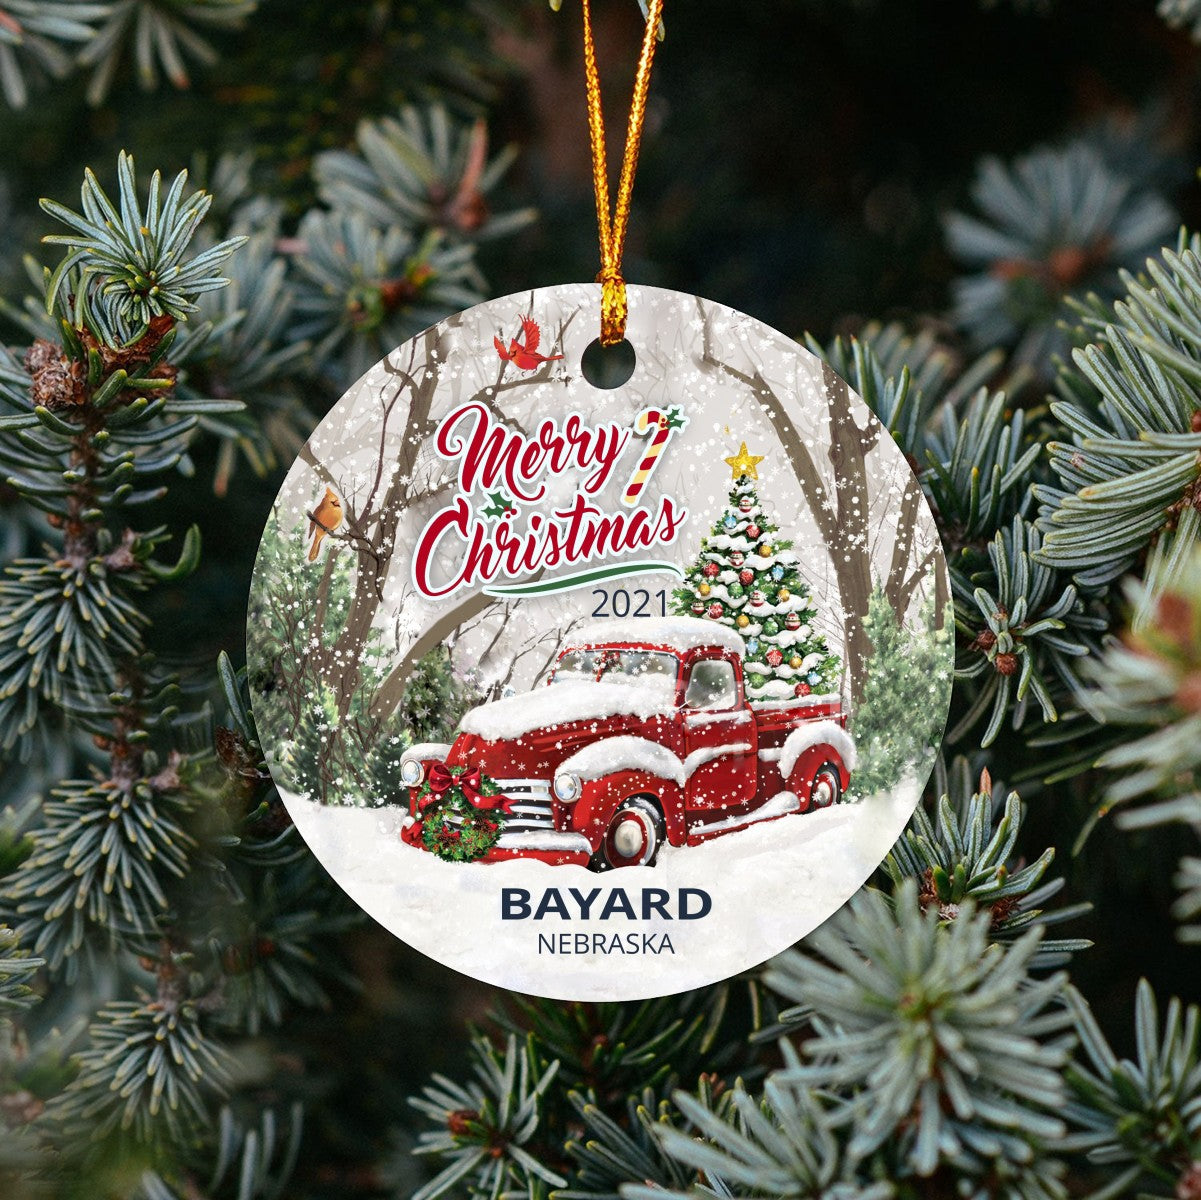 Christmas Tree Ornaments Bayard - Ornament With Name City, State Bayard Nebraska NE Ornament - Red Truck Xmas Ornaments 3'' Plastic Gift For Family, Friend And Housewarming